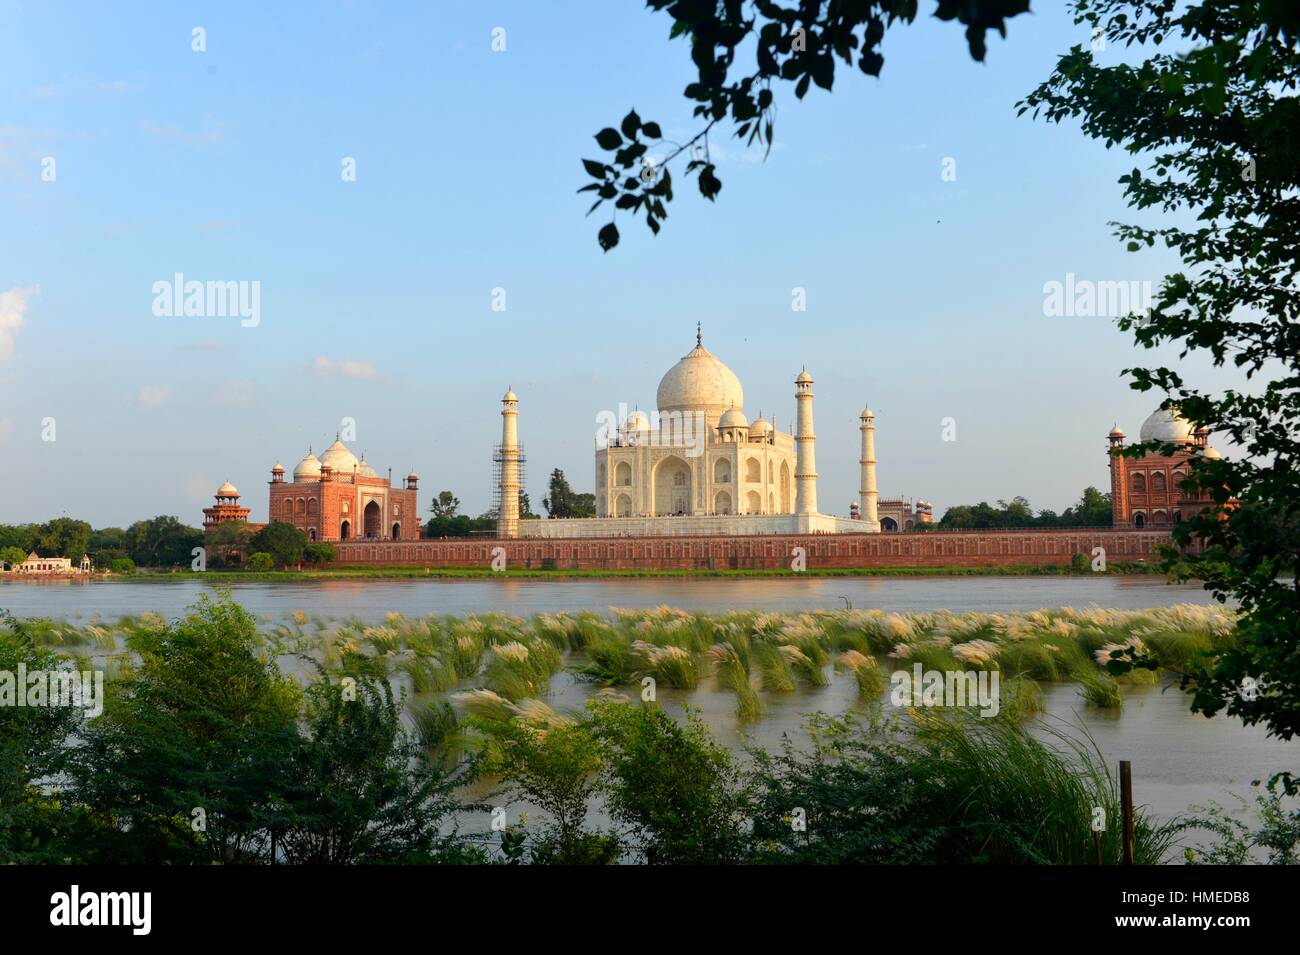 The Taj Mahal in Agra, India. Stock Photo